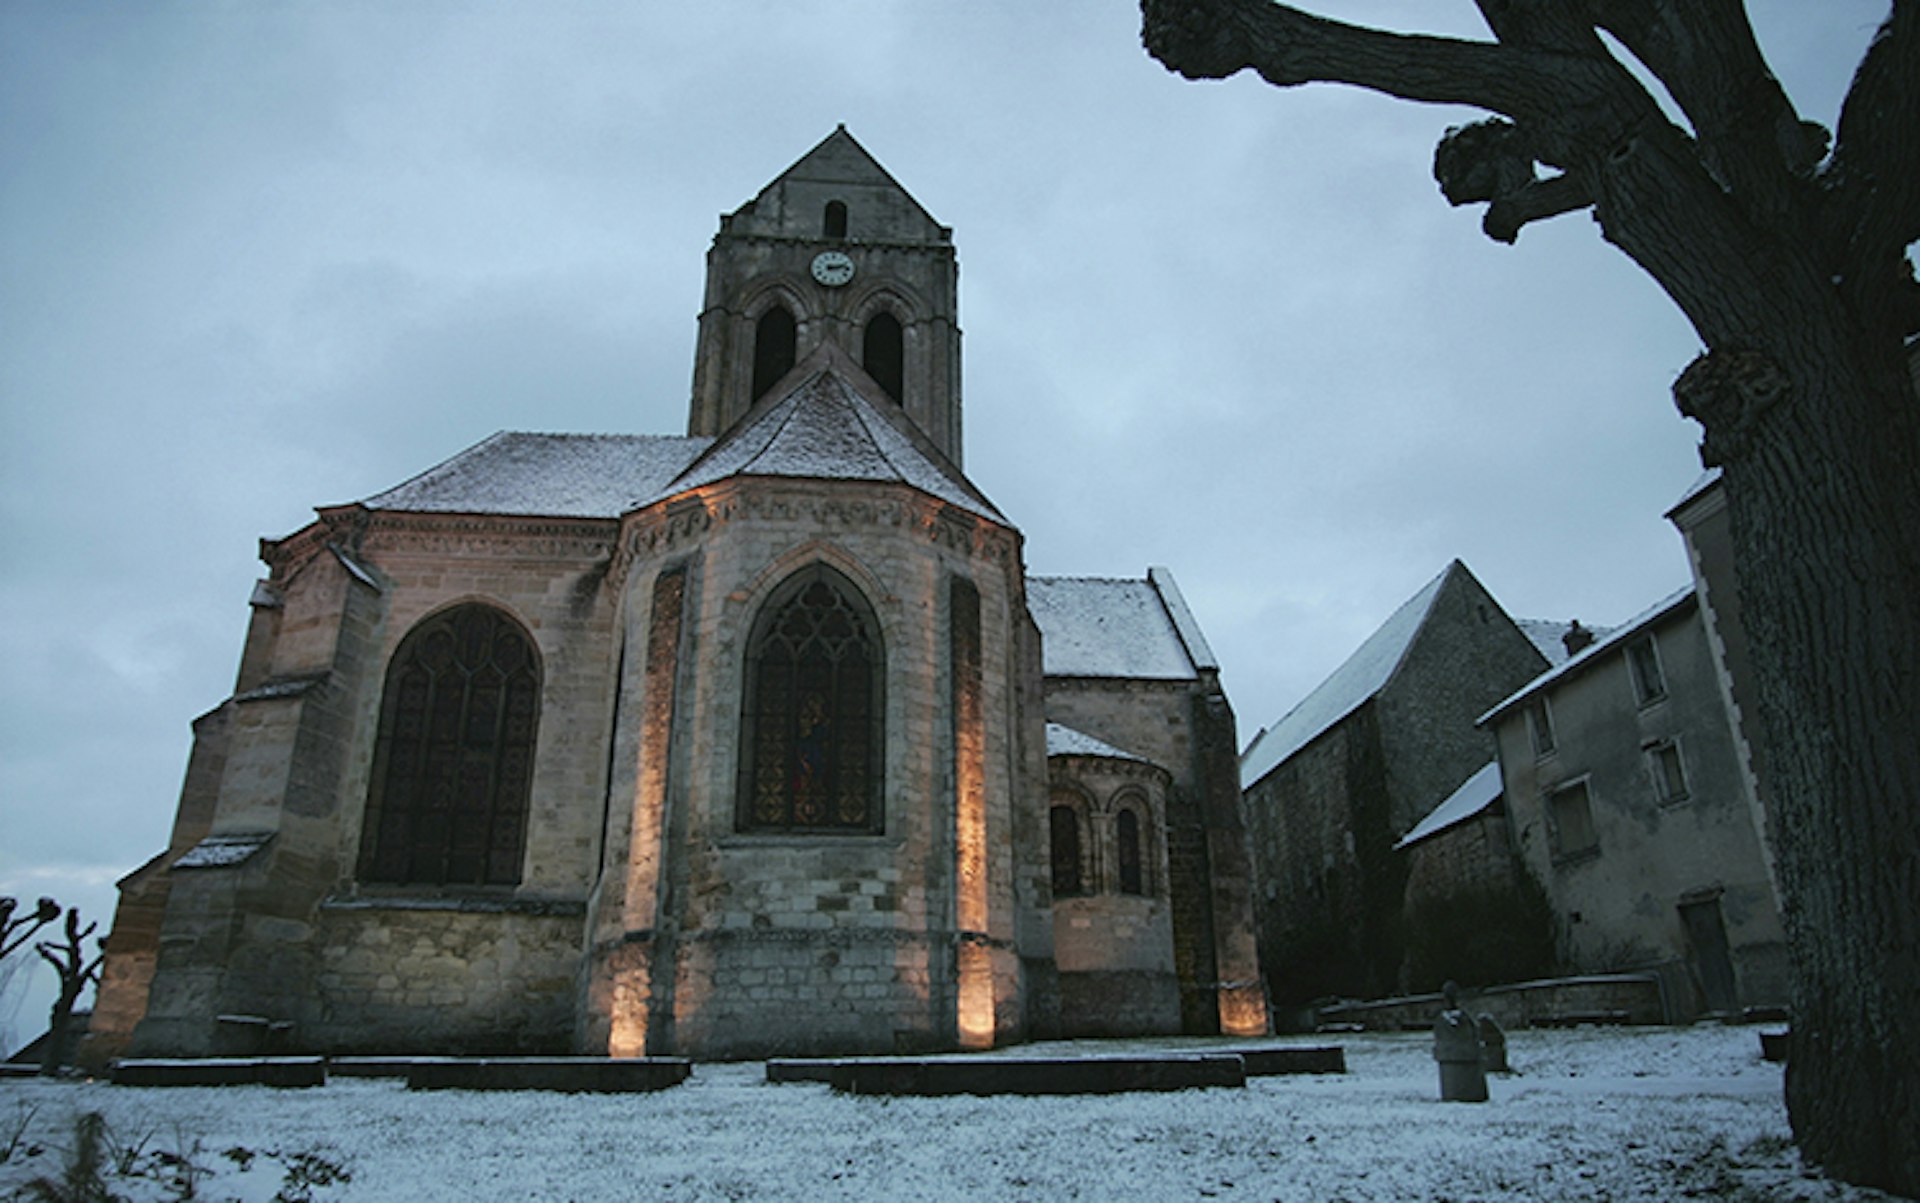 The church of Auvers-sur-Oise, France